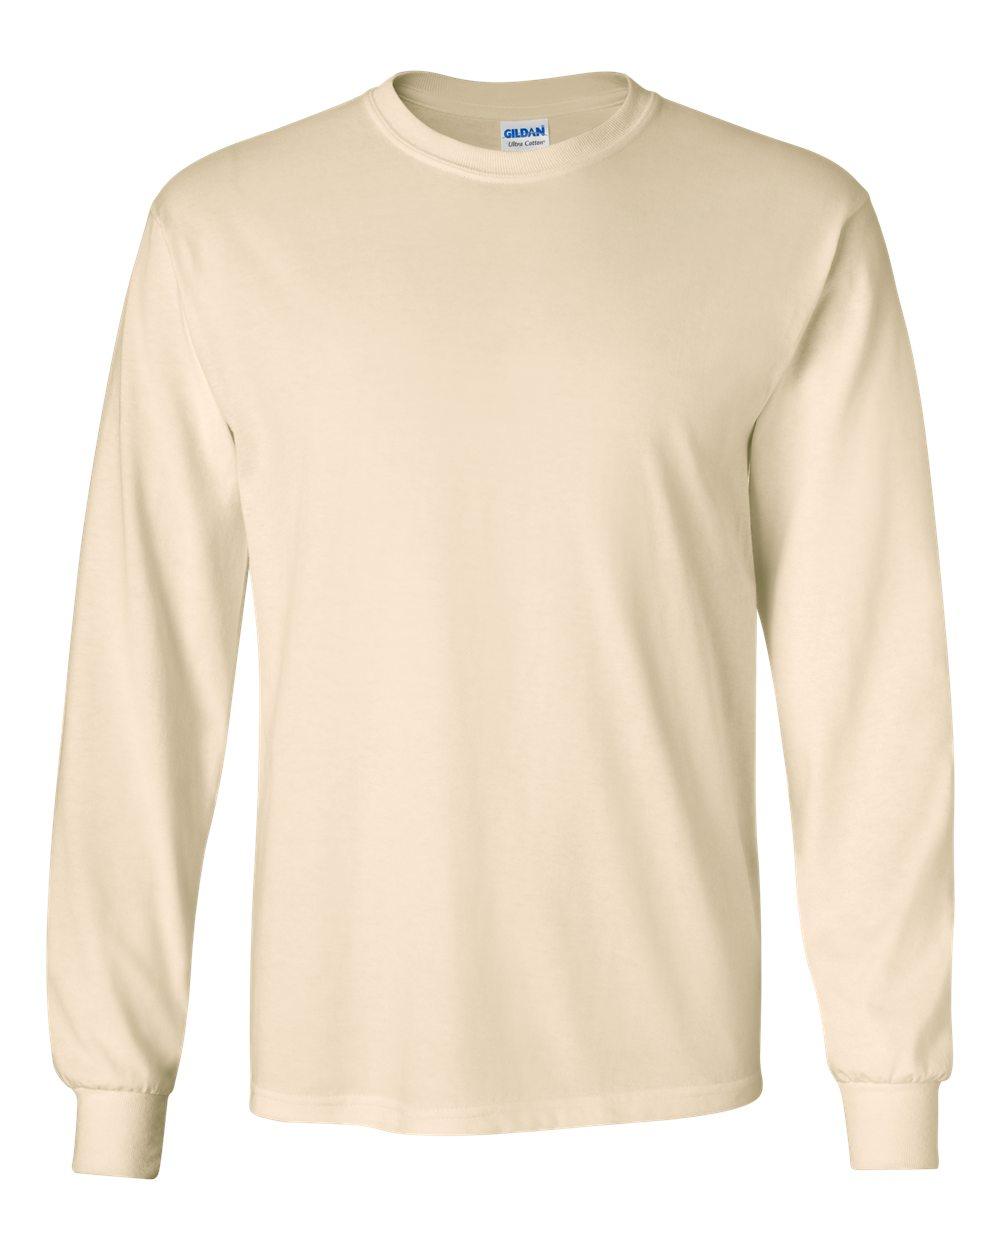 Ultra Cotton® Long Sleeve T-Shirt - 2400 -Gildan - Leatherwood Trading Post